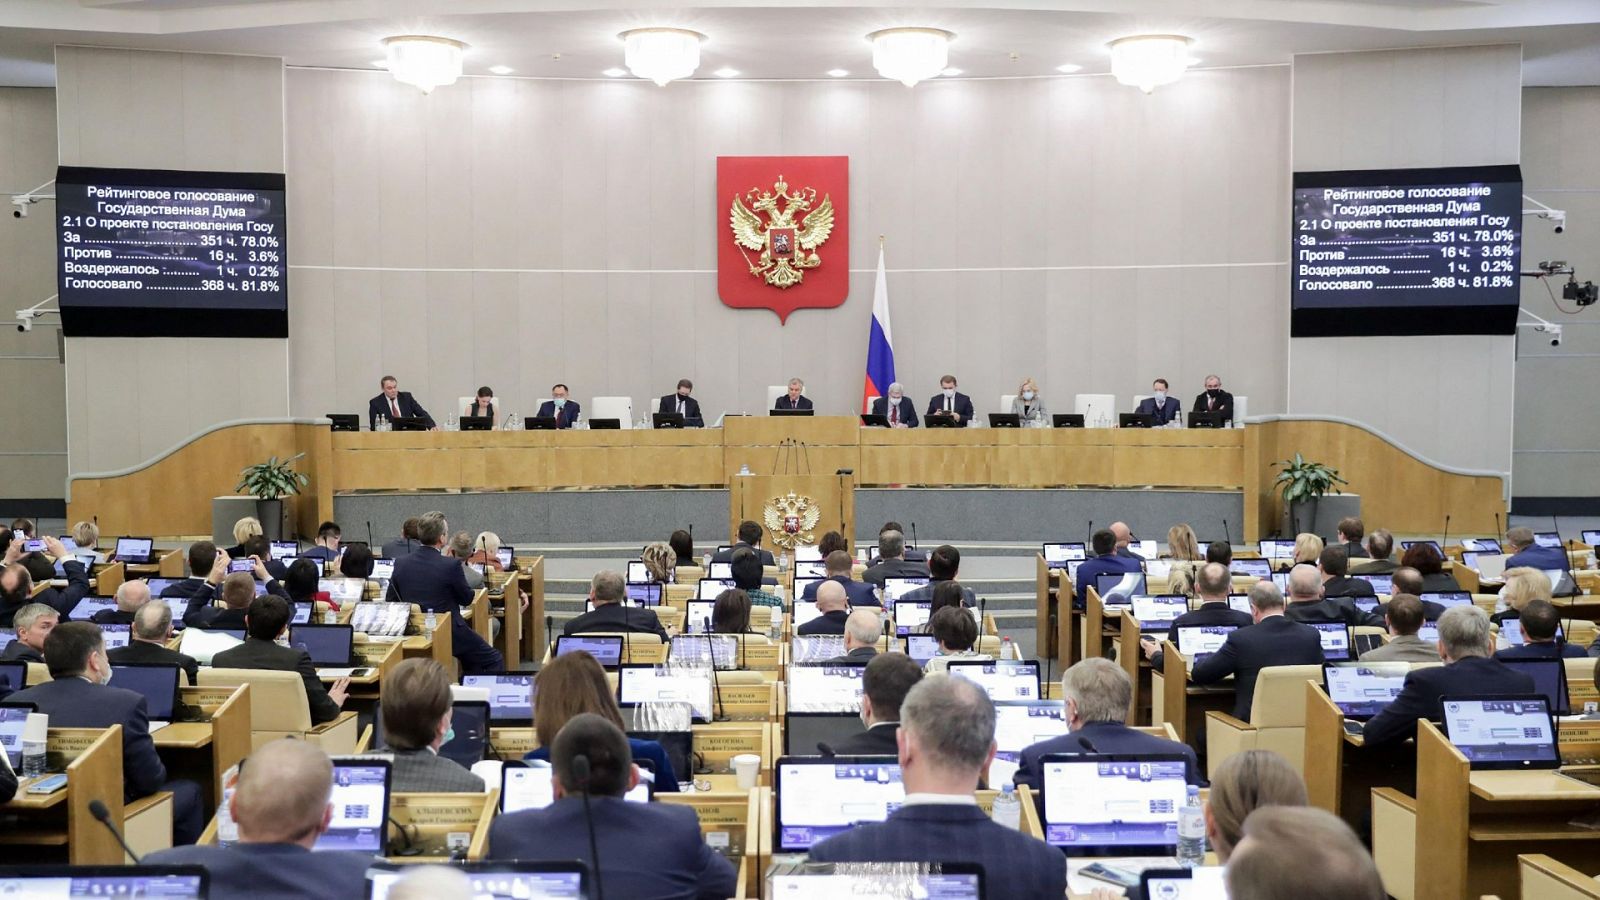 La Duma del Estado, la cámara baja del Parlamento de Rusia